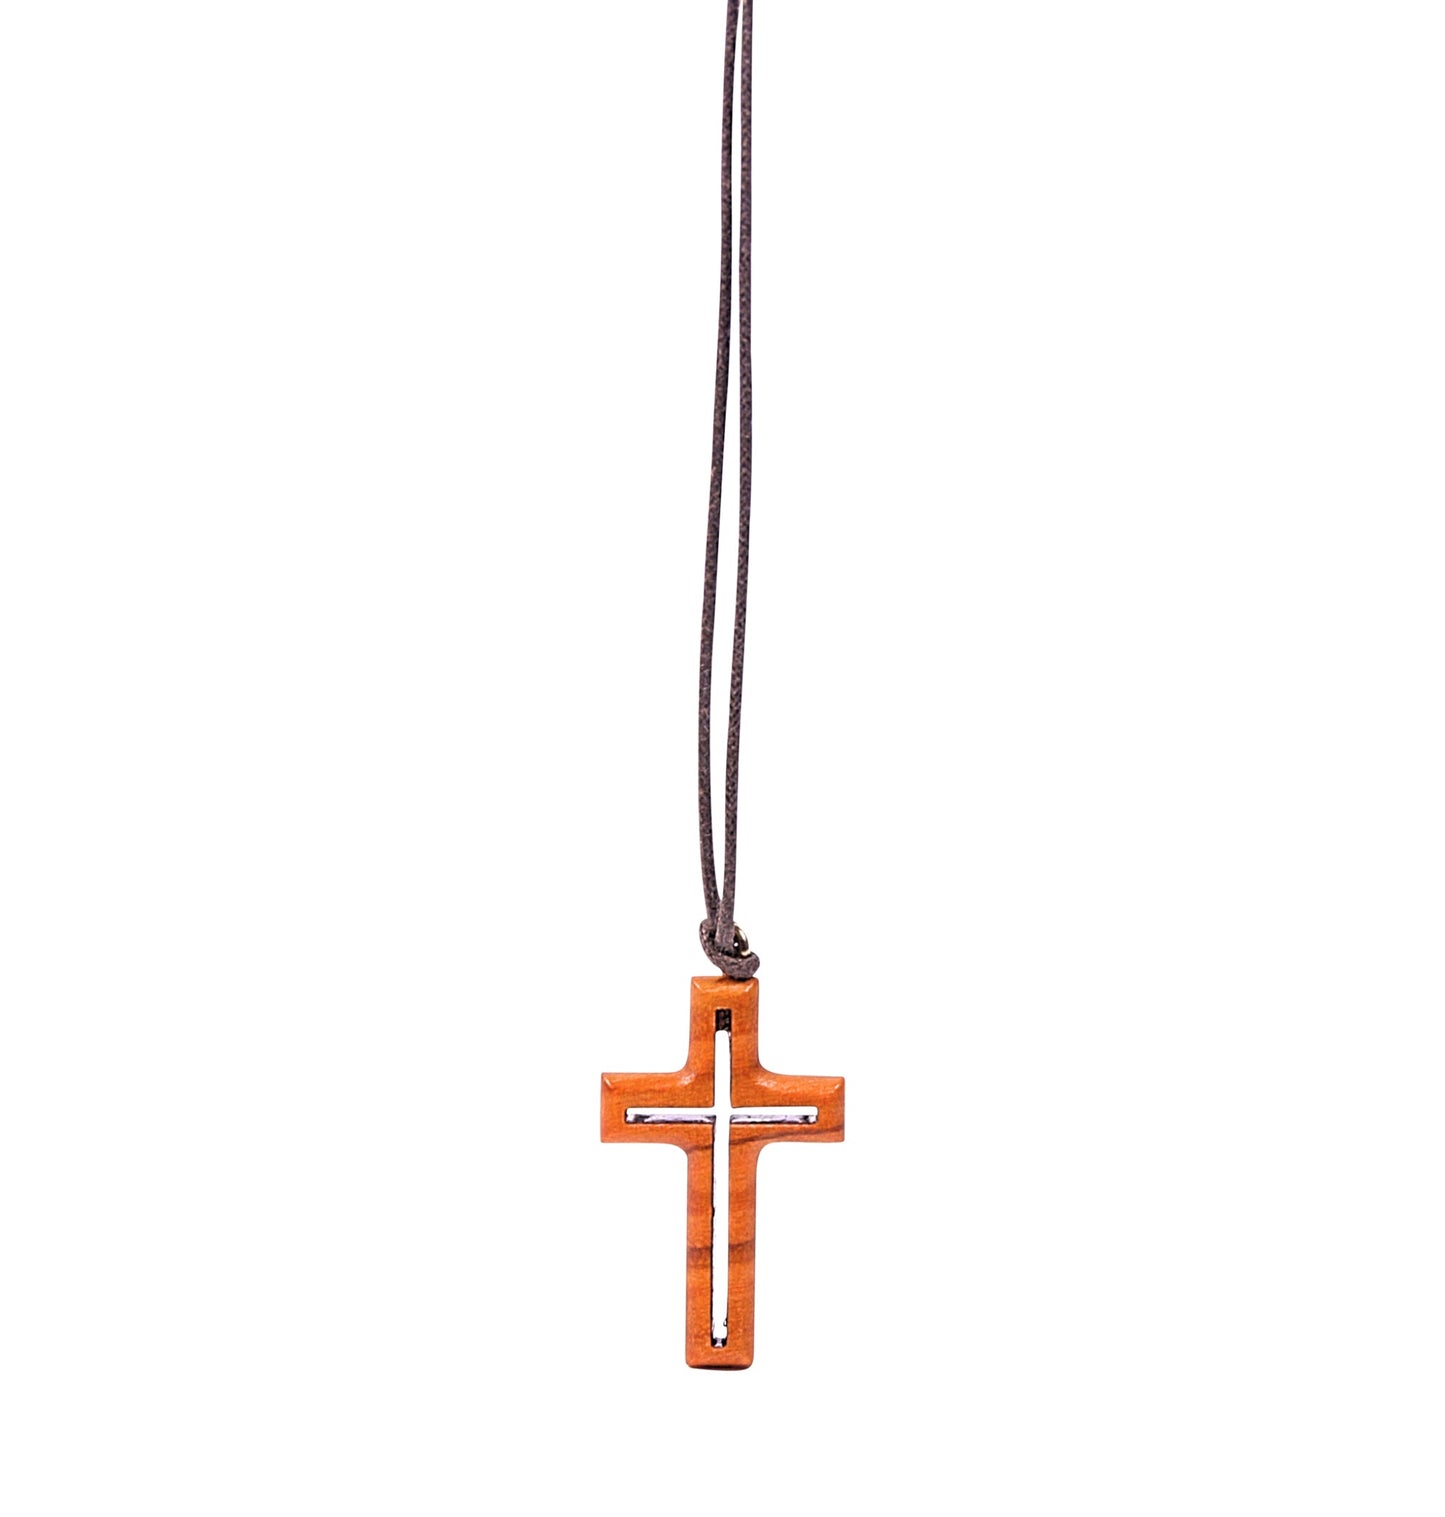 Nazfat "Dual Essence" Olive Wood Cross Pendant Necklace